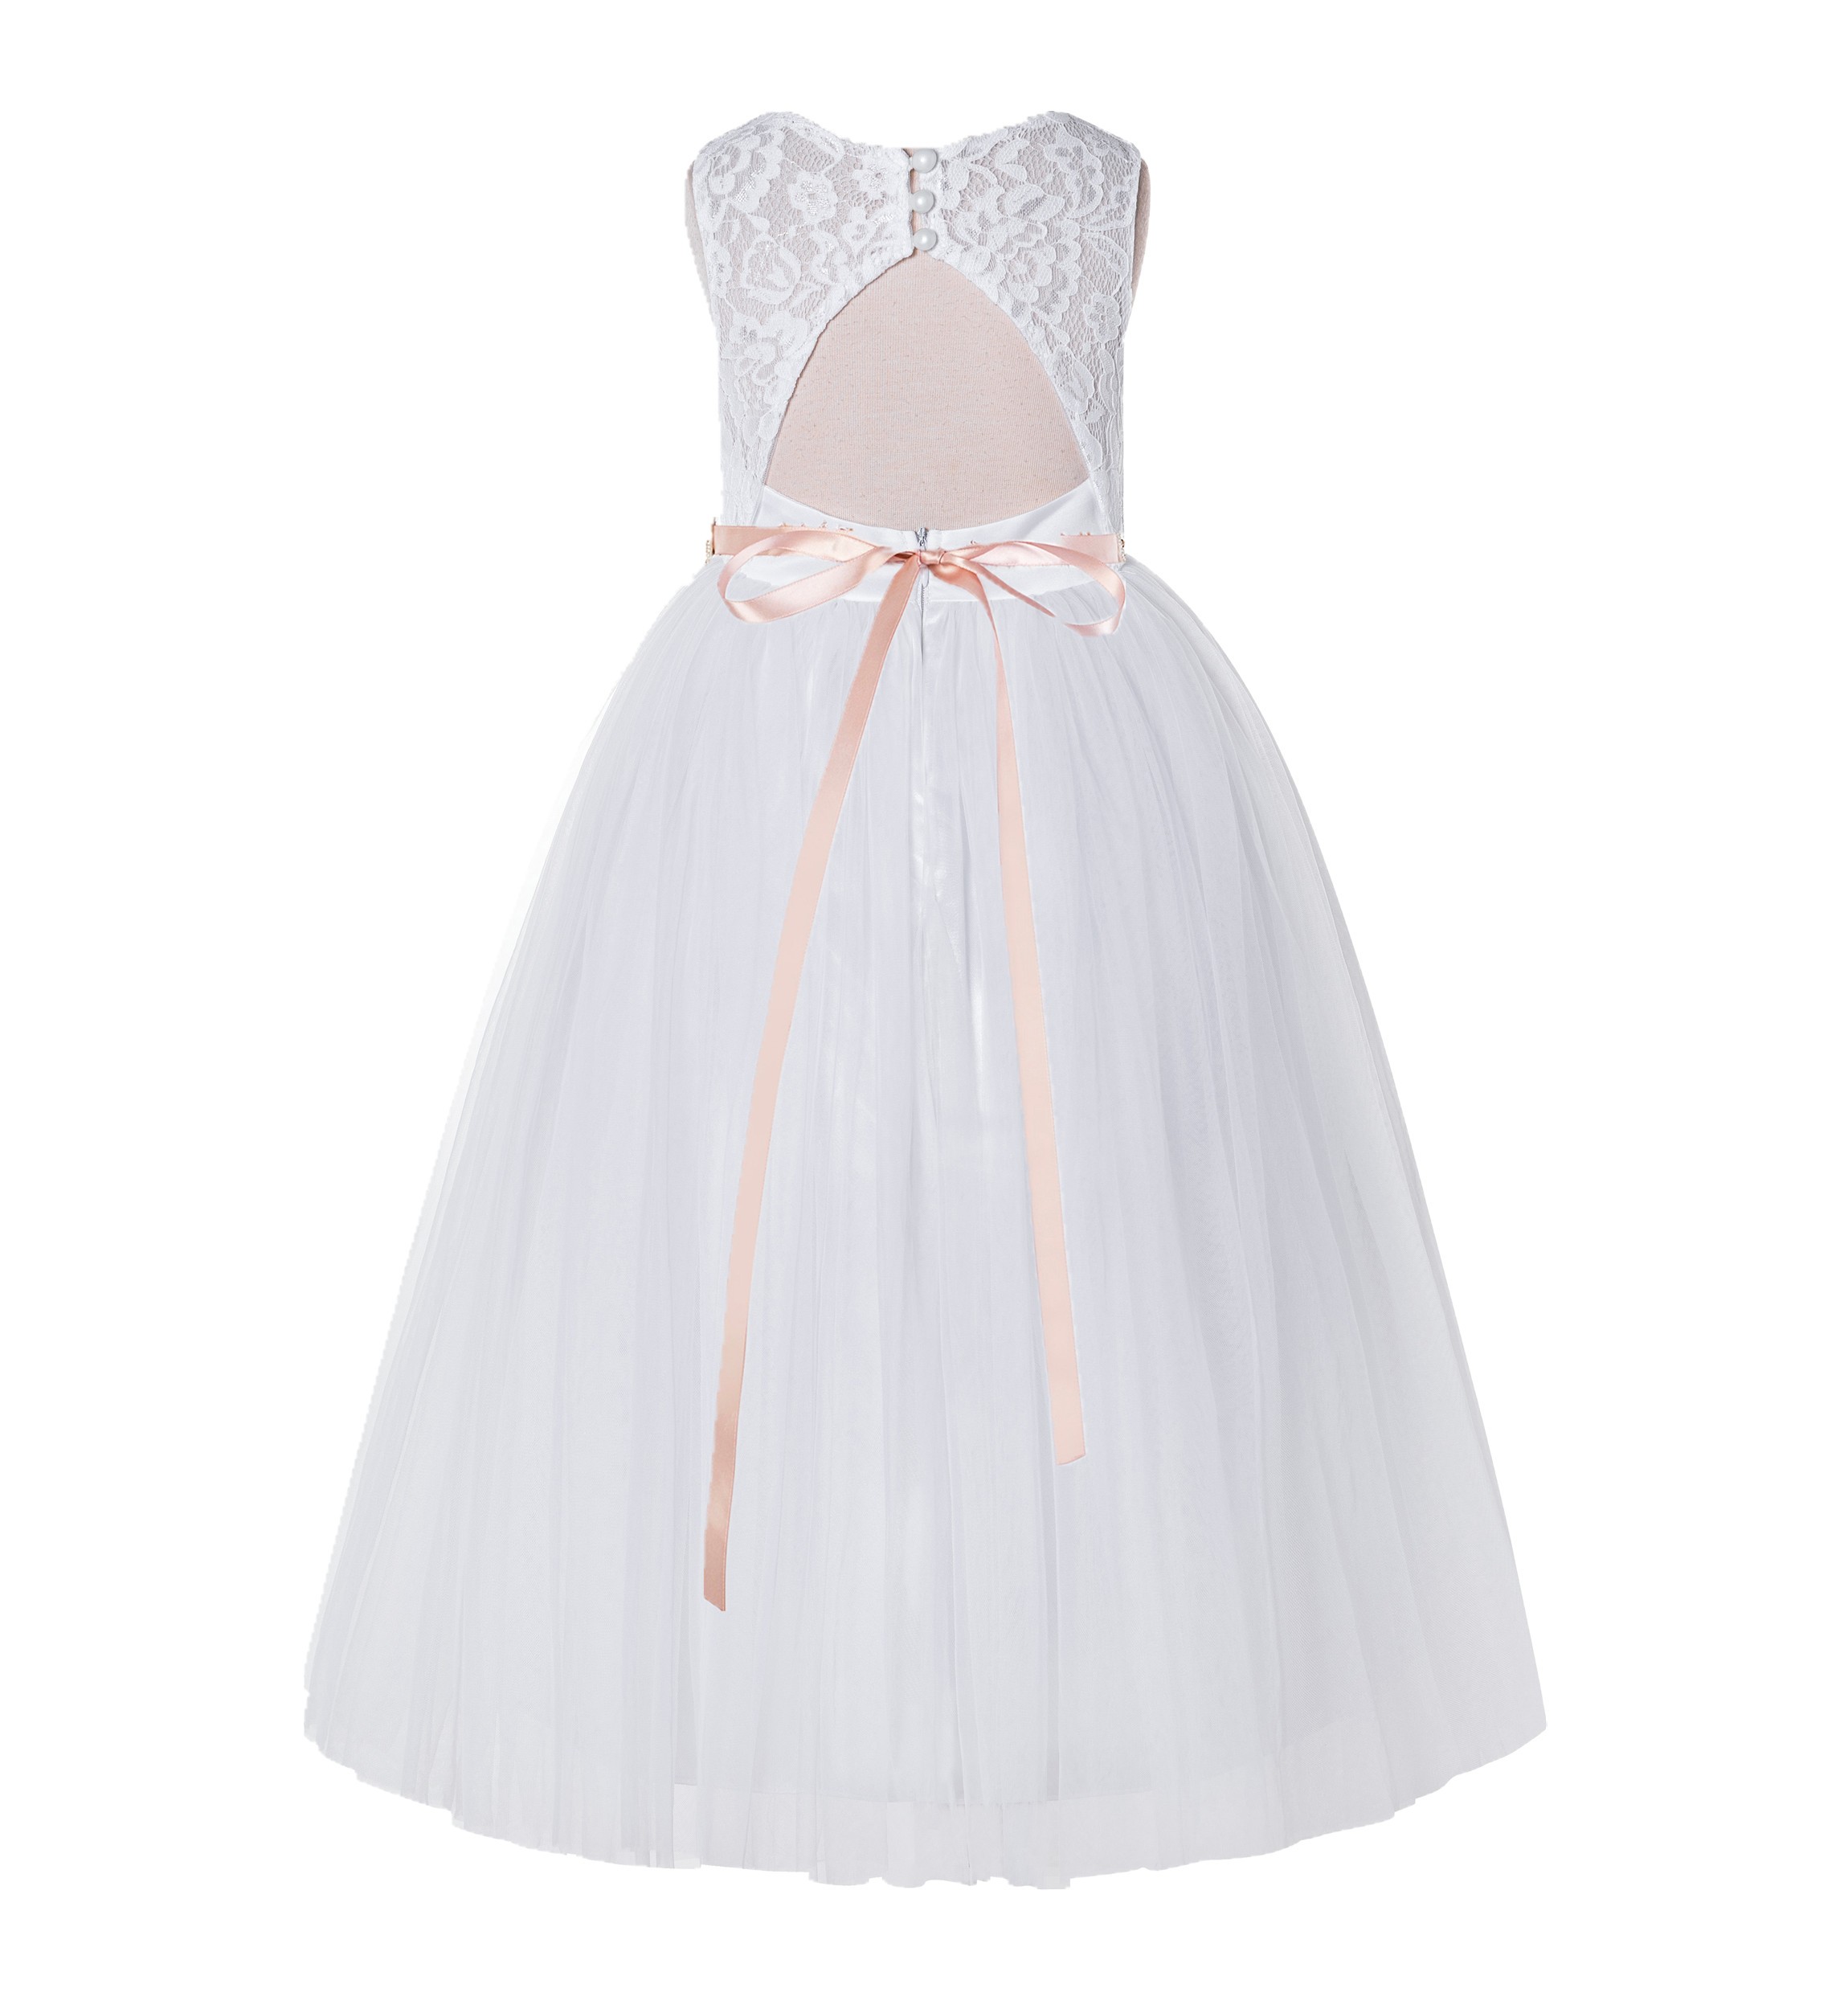 White / Blush Pink A-Line Lace Flower Girl Dress 178R2